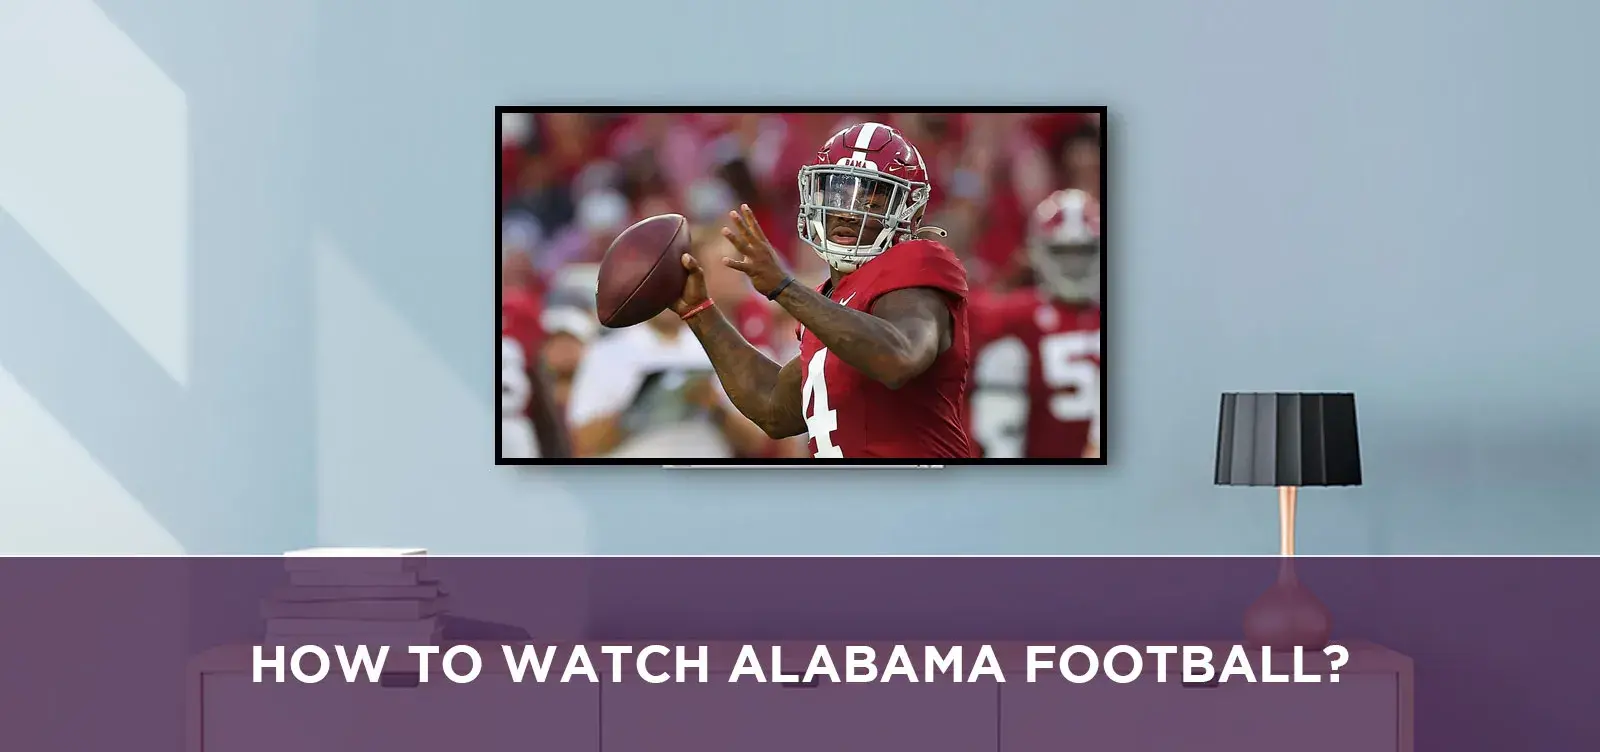 How To Watch Alabama Football?